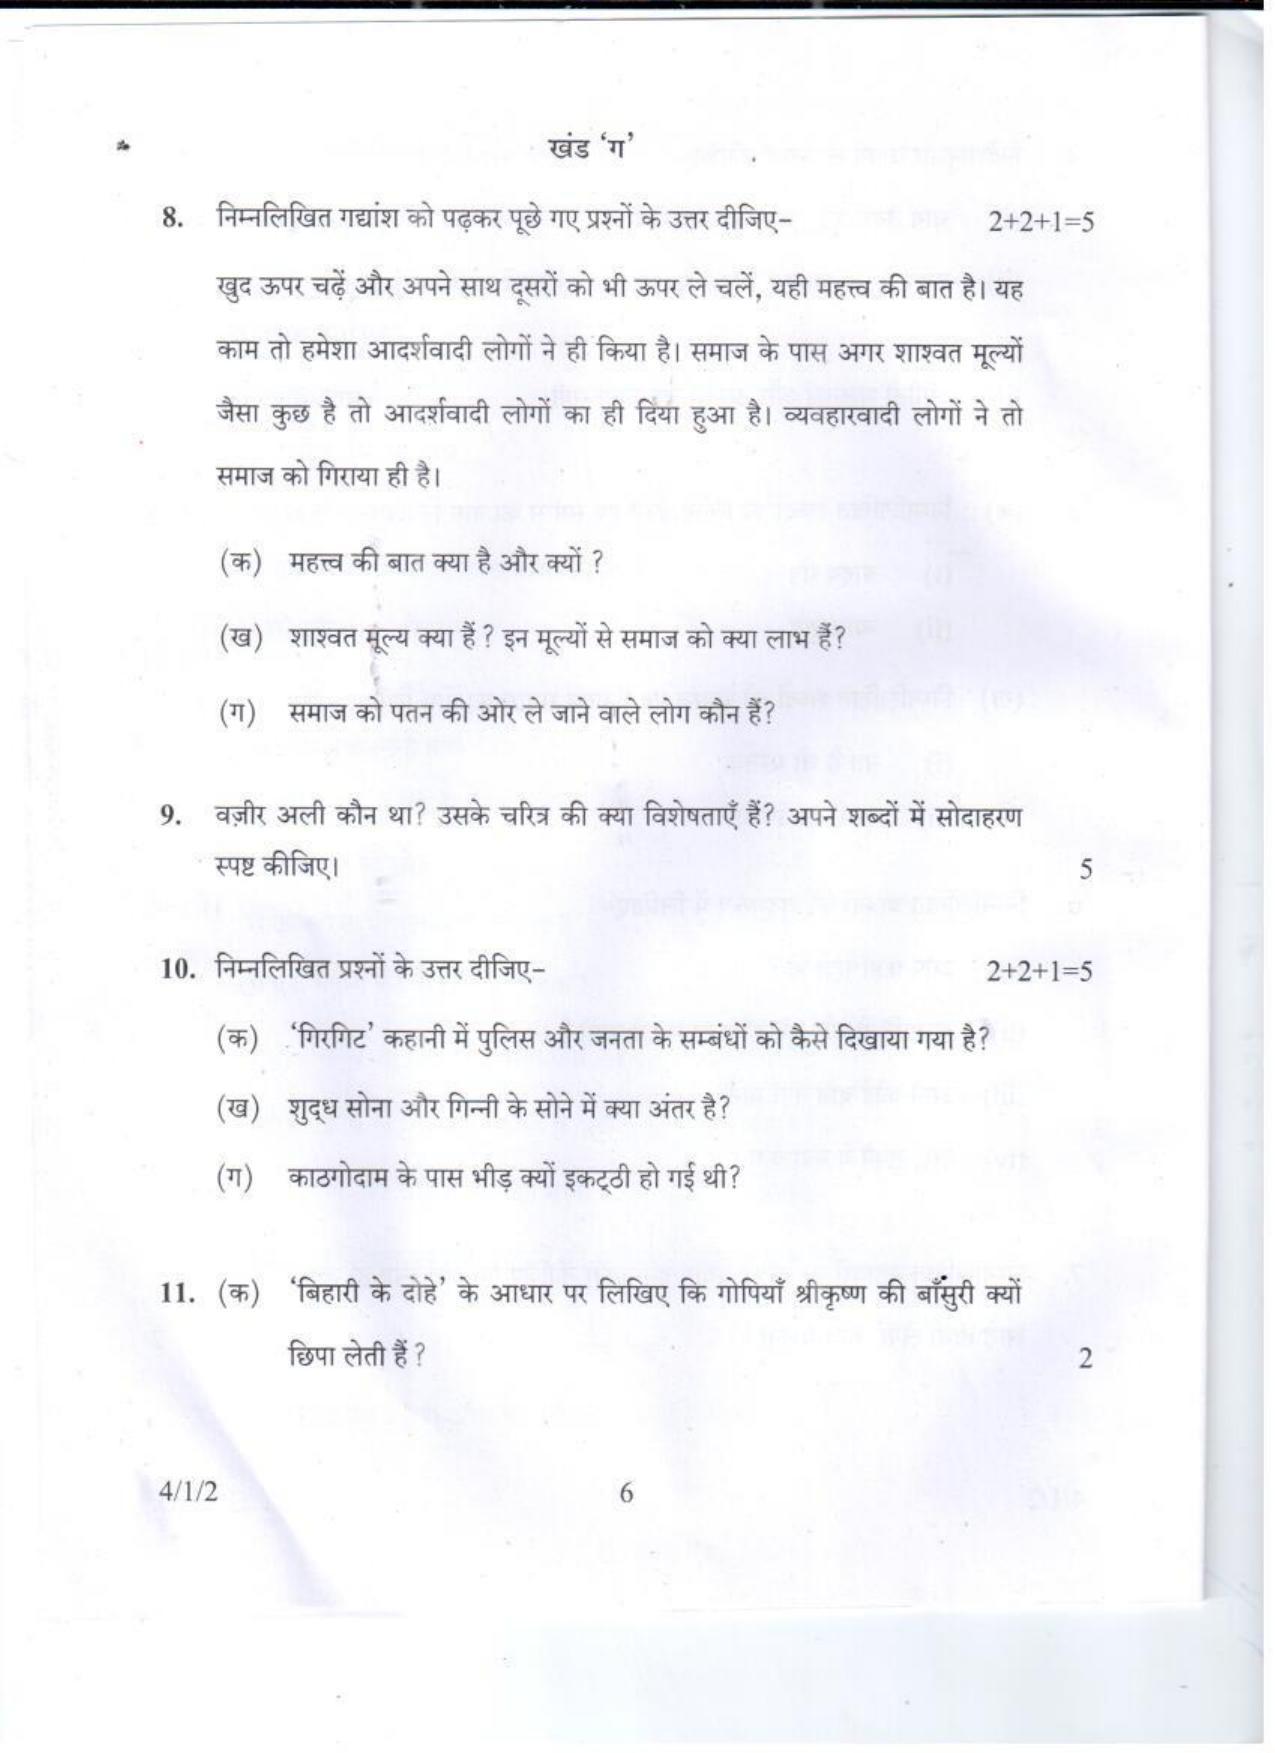 CBSE Class 10 Hindi HRK Set-2-Delhi-10 2017 Question Paper - Page 6